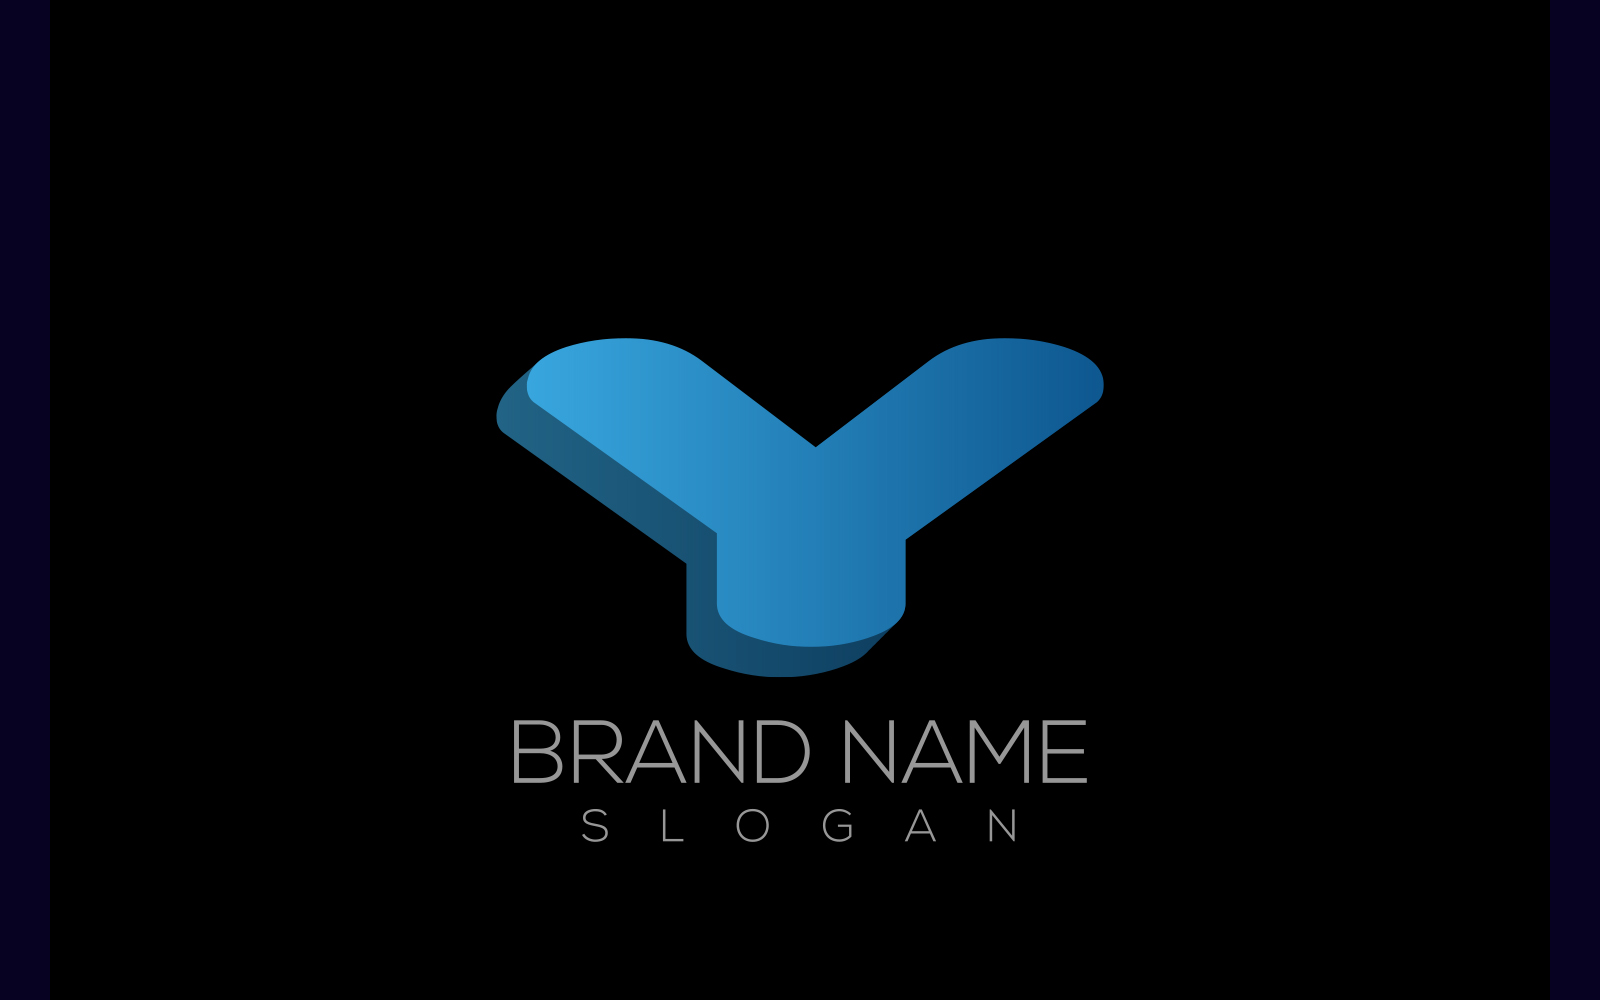 Premium Vector | Initial y alphabet with swoosh or ocean wave logo design  graphic alphabet symbol for corporate business identity